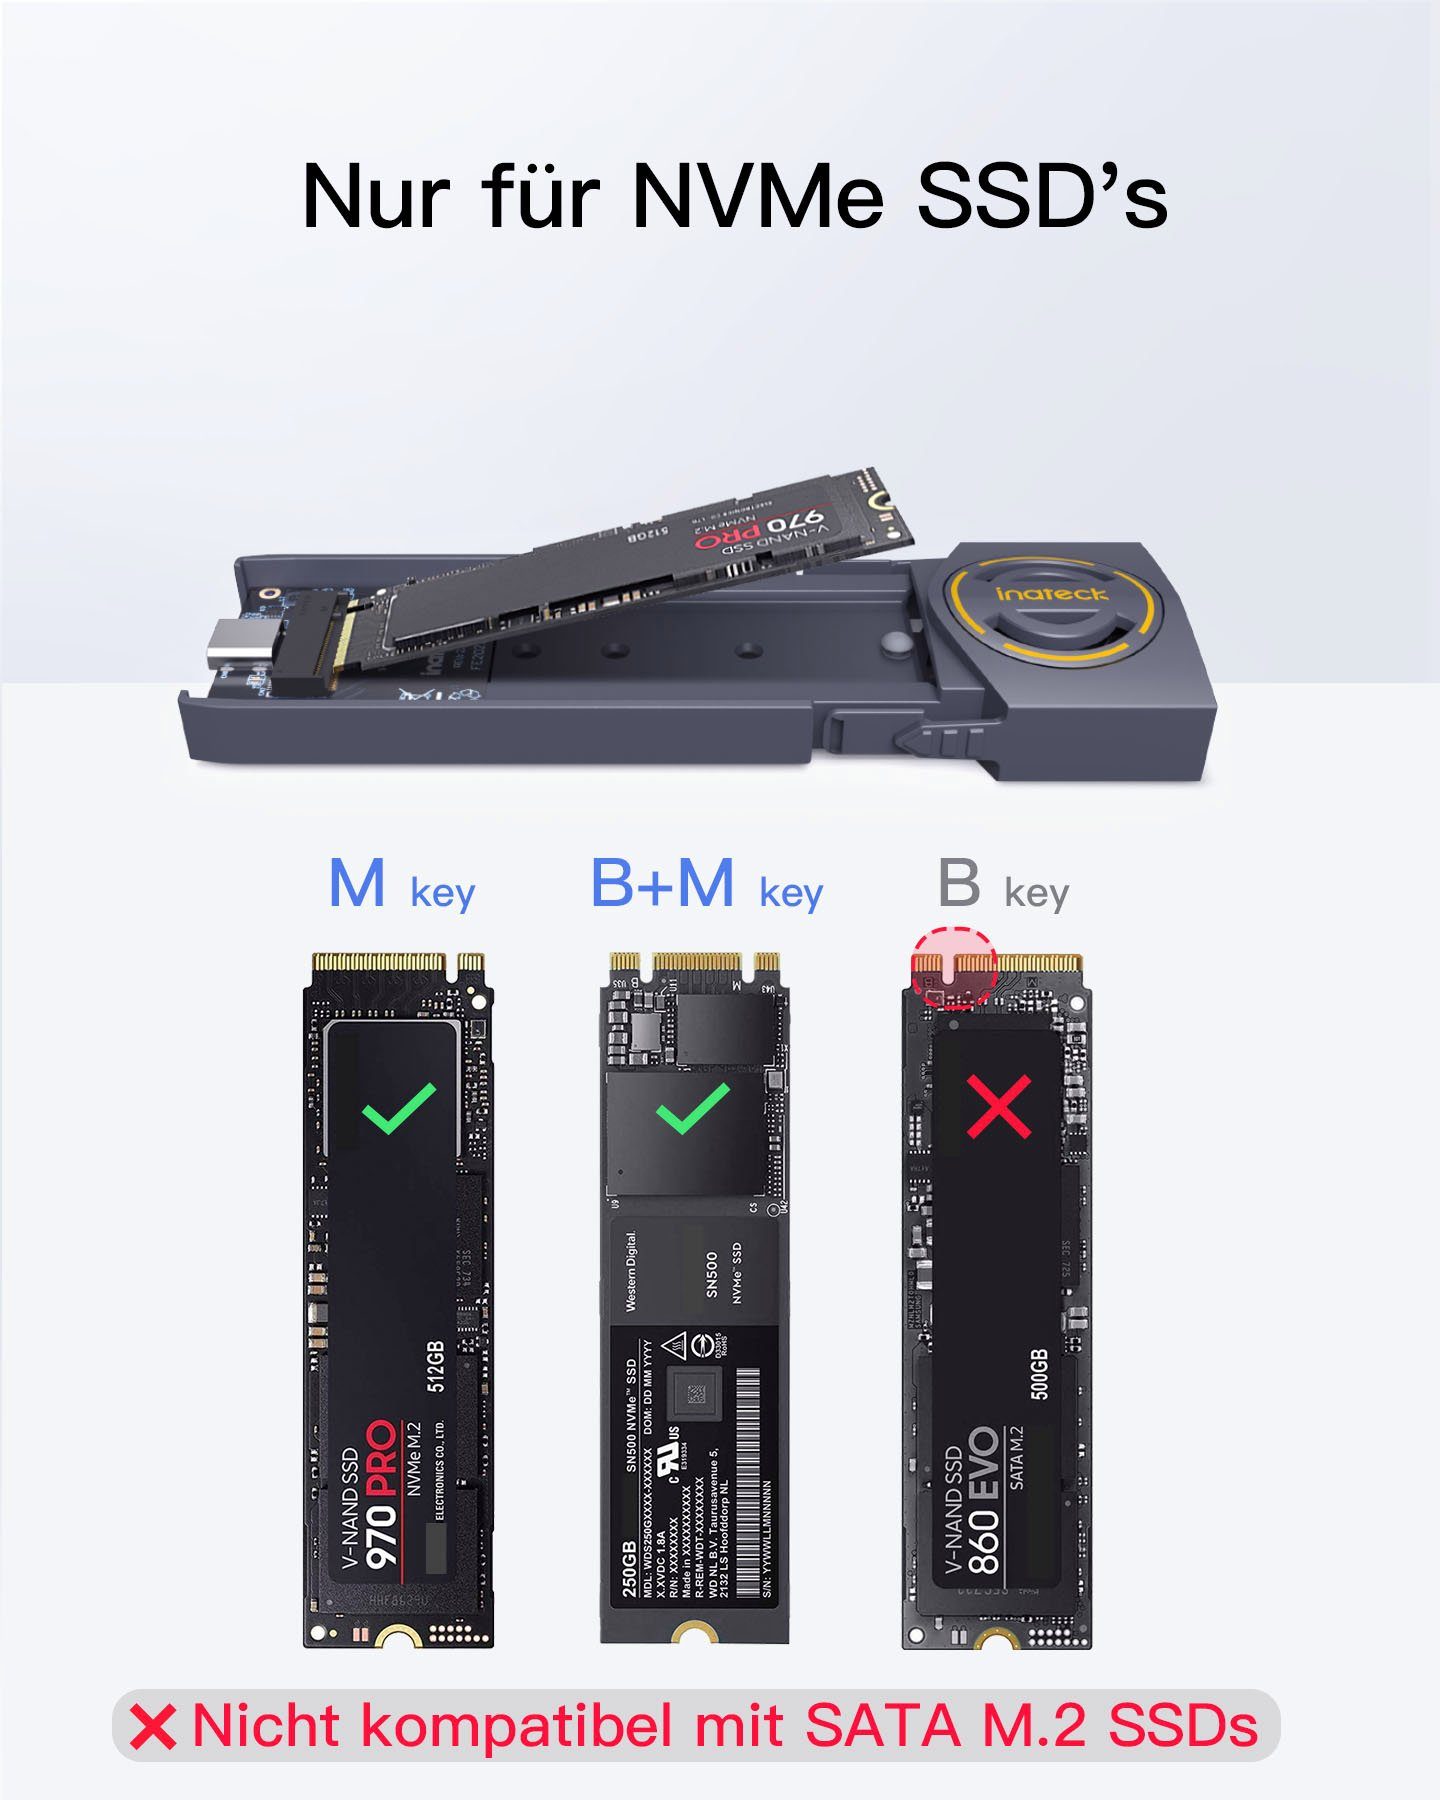 USB Inateck 3.2 Gen 2 Festplatten-Gehäuse M.2 NVMe Gehäuse, SSD Adapter